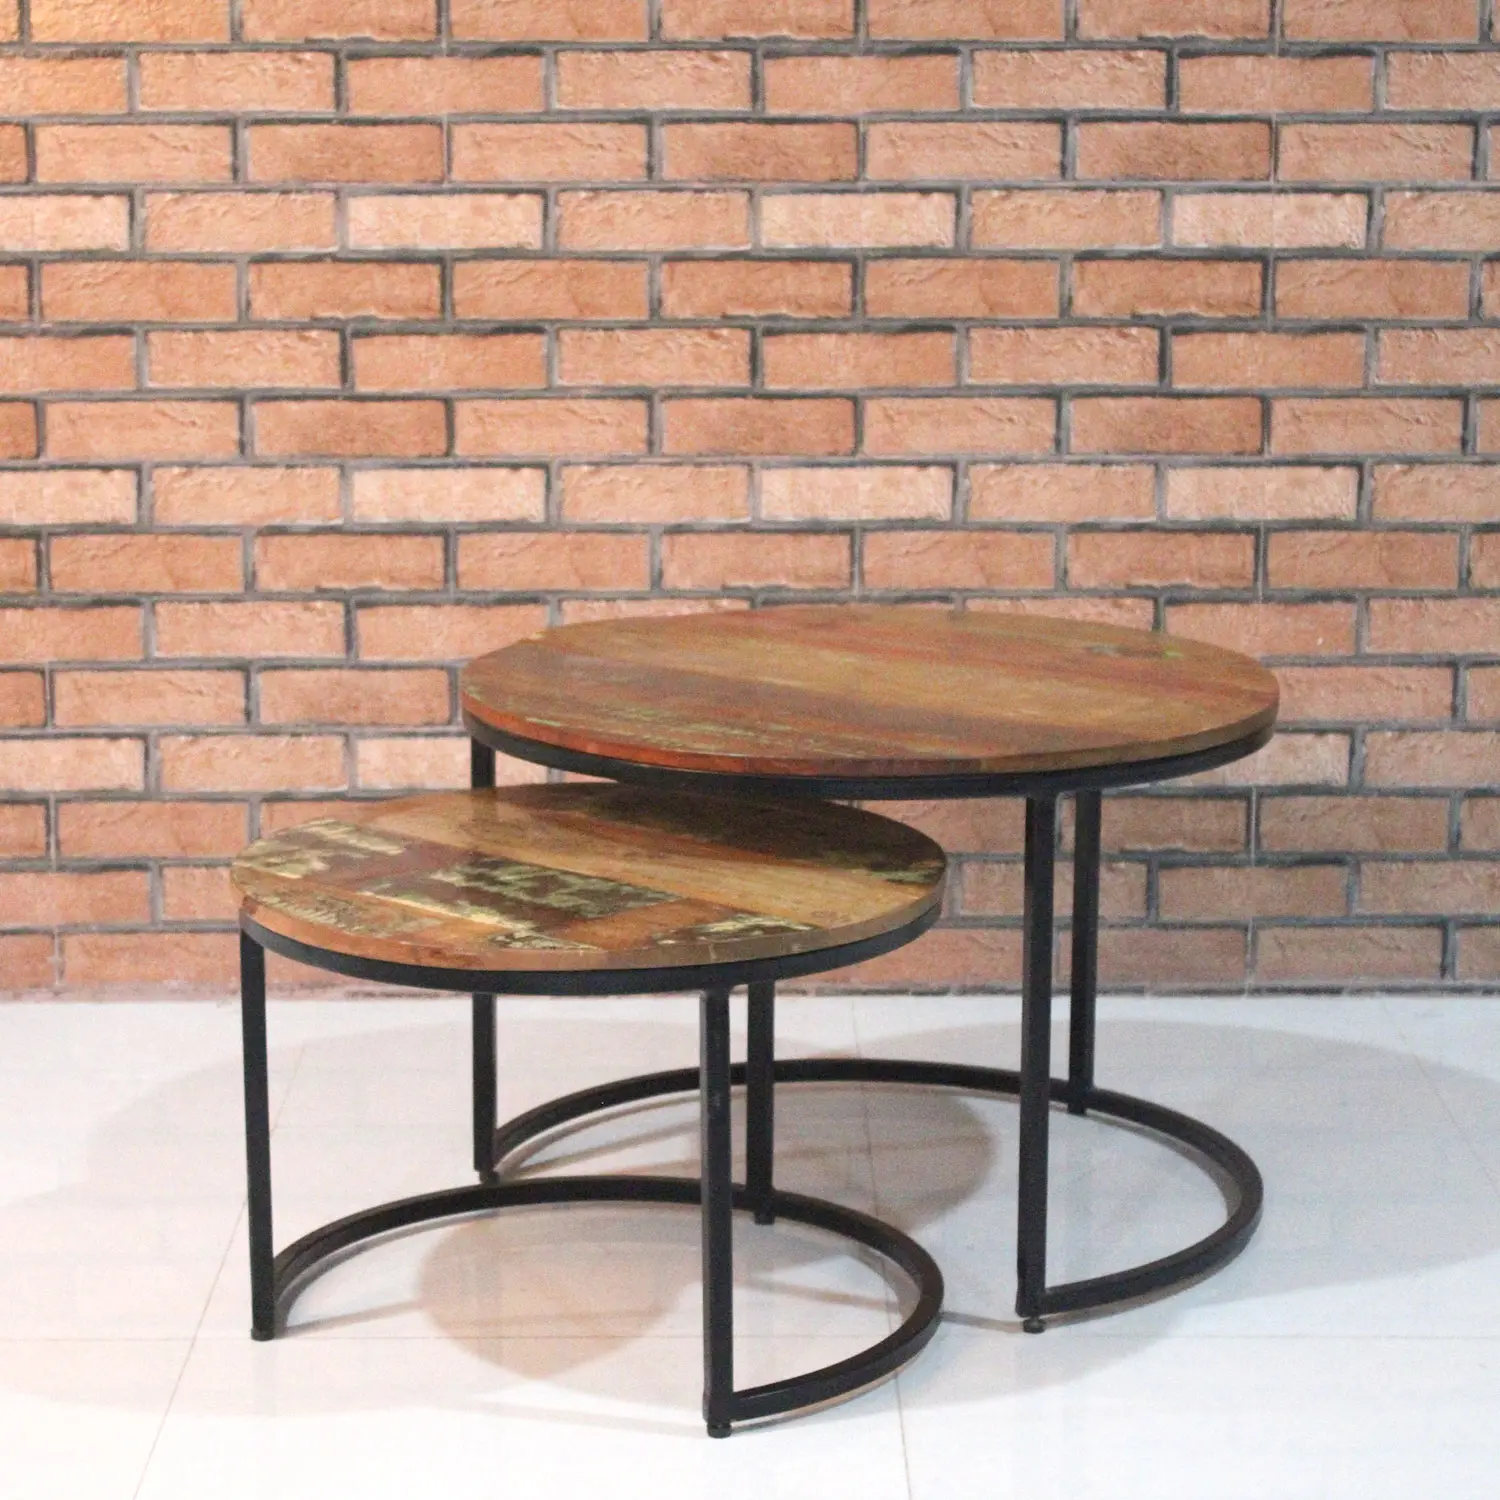 Wooden Round Nesting Coffee Table
Set of 2 - popular handicrafts